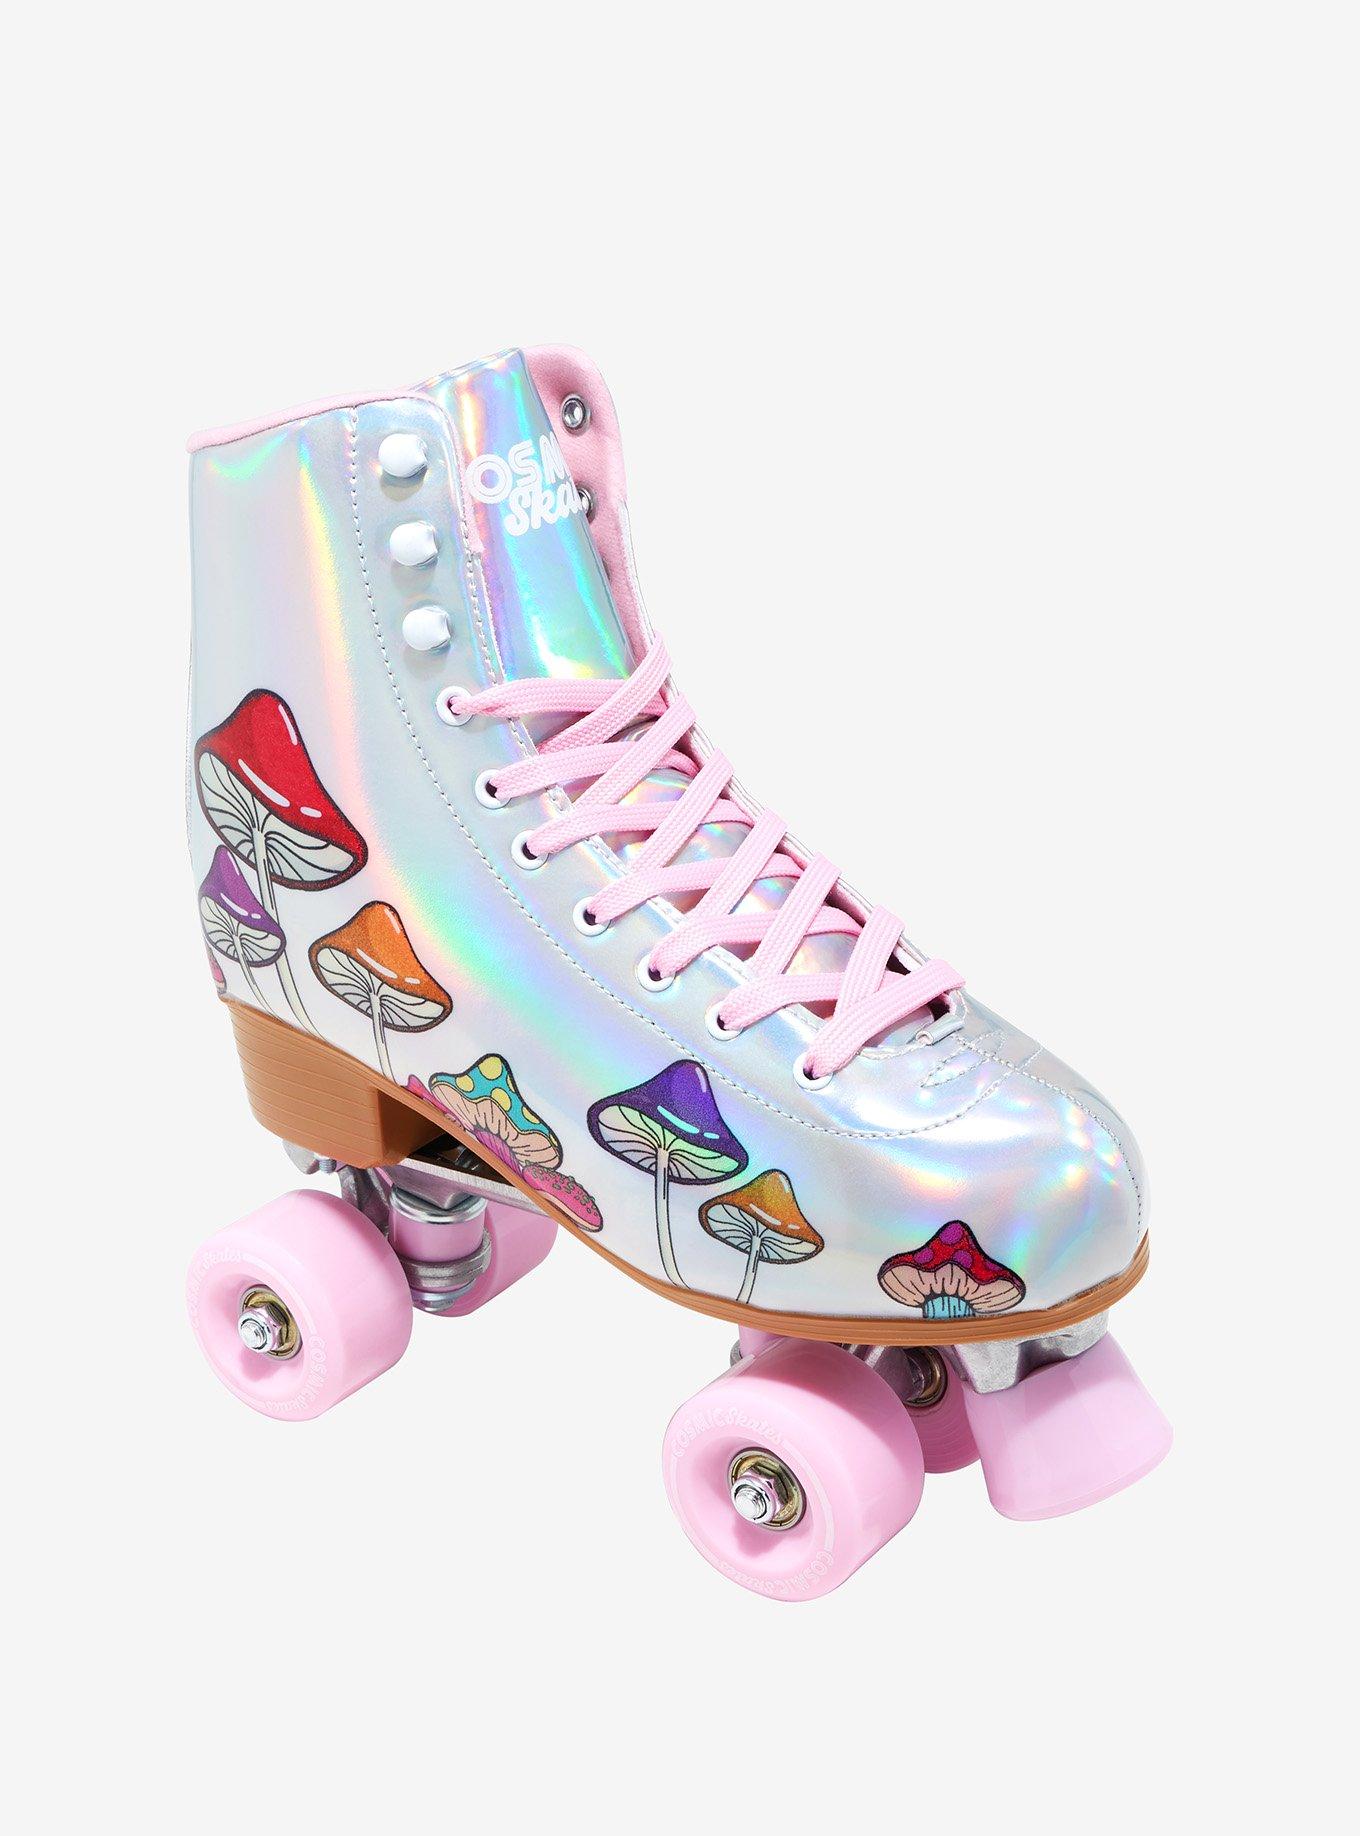 Cosmic Skates Iridescent Mushroom Roller Skates